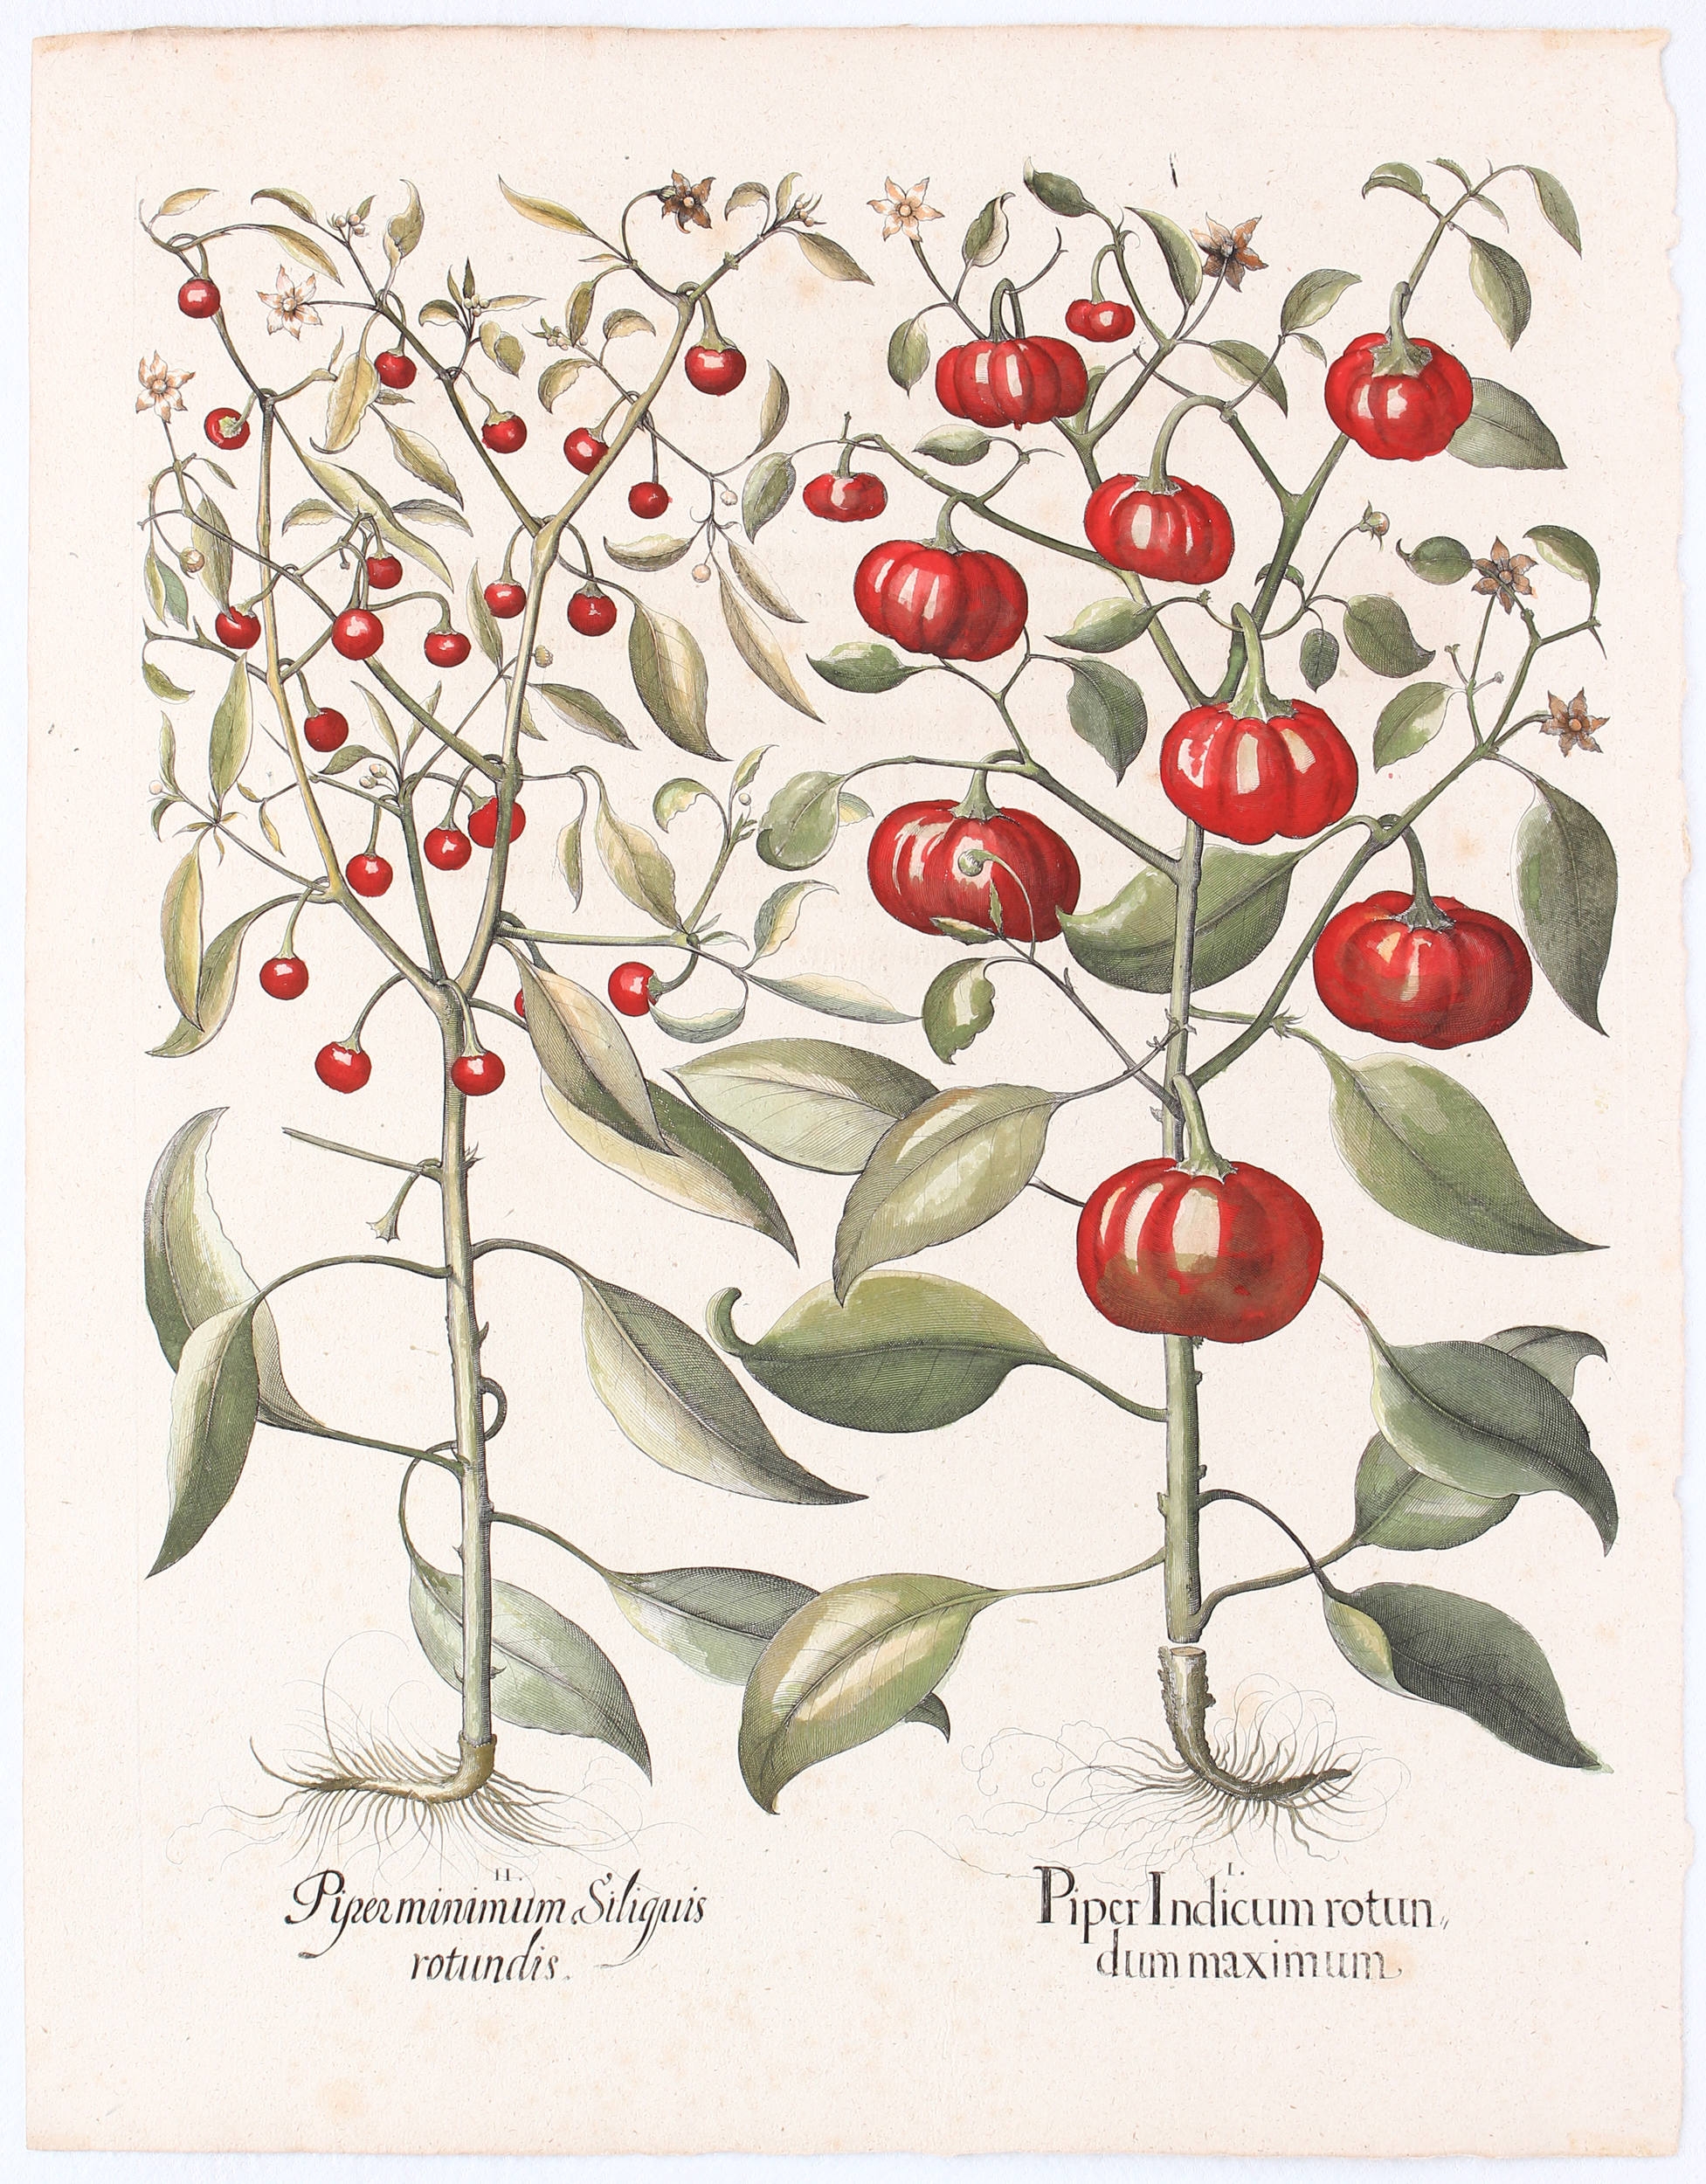 Artwork by Basilius Besler, Piper Indicum rotundum maximum (&) minimum Siliguis rotundis (Süße und Kirschen-Paprika)